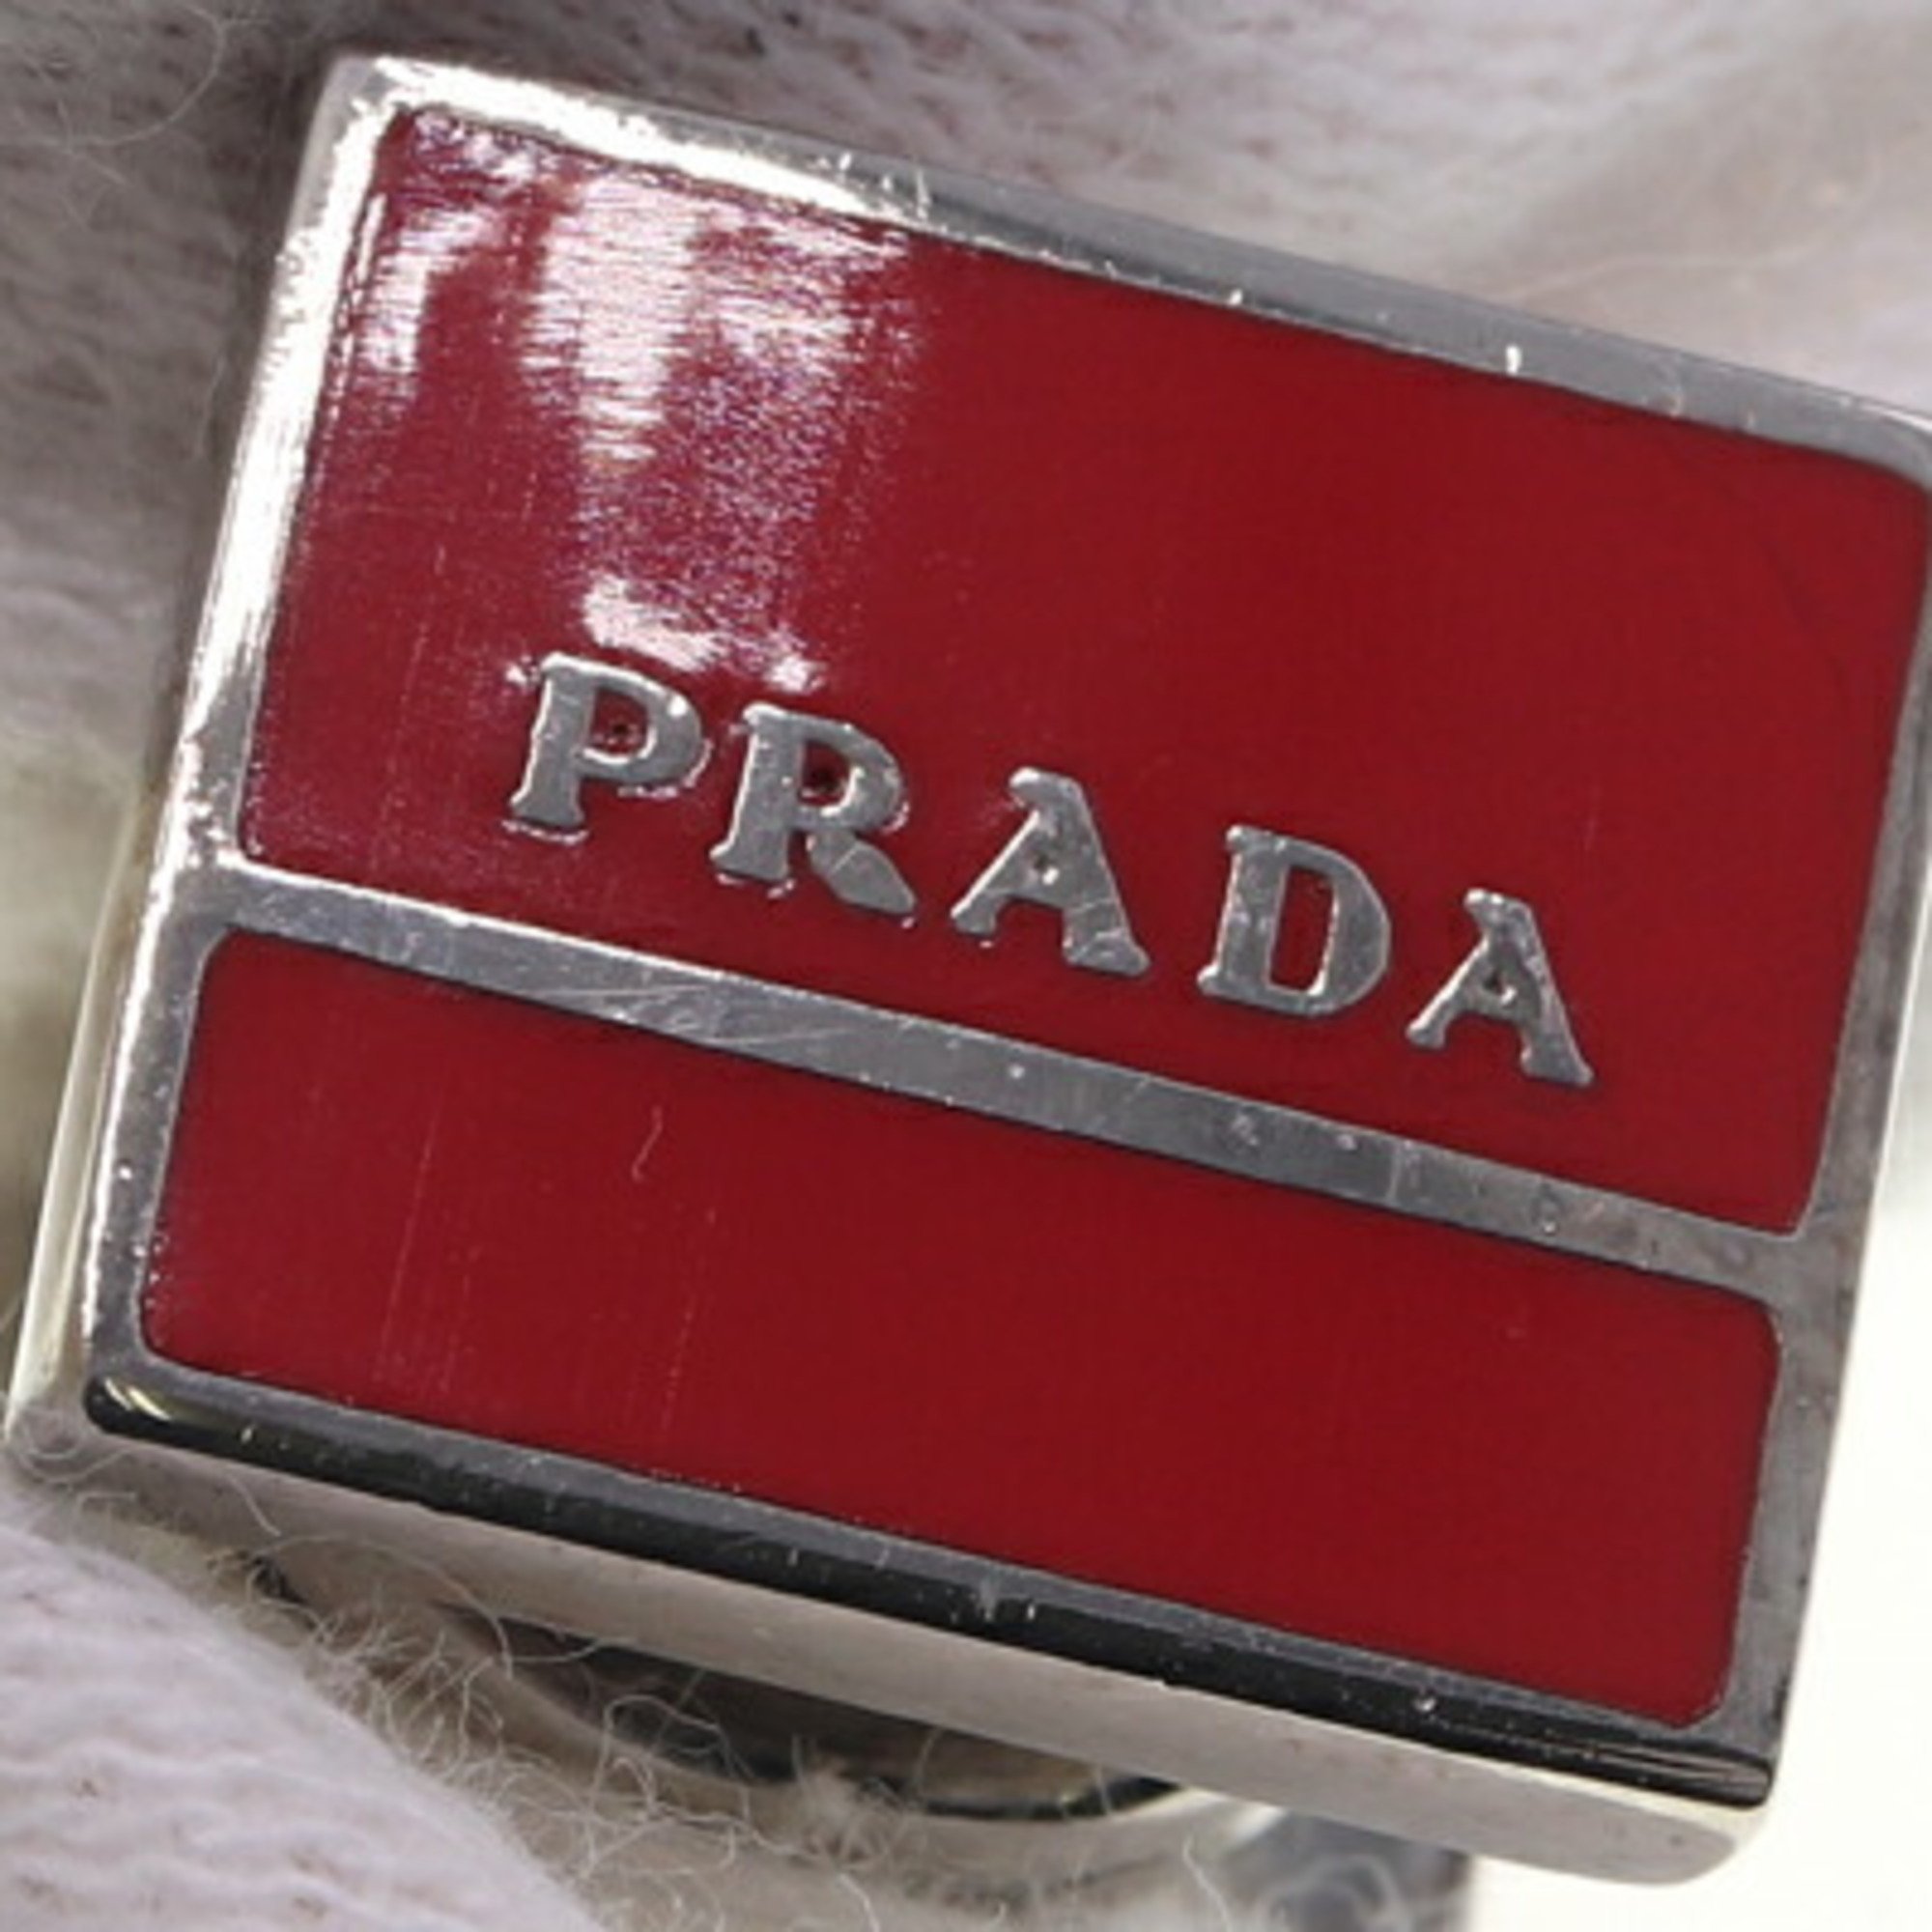 Prada Cufflinks 2AR018 Red Silver Brass Men's PRADA